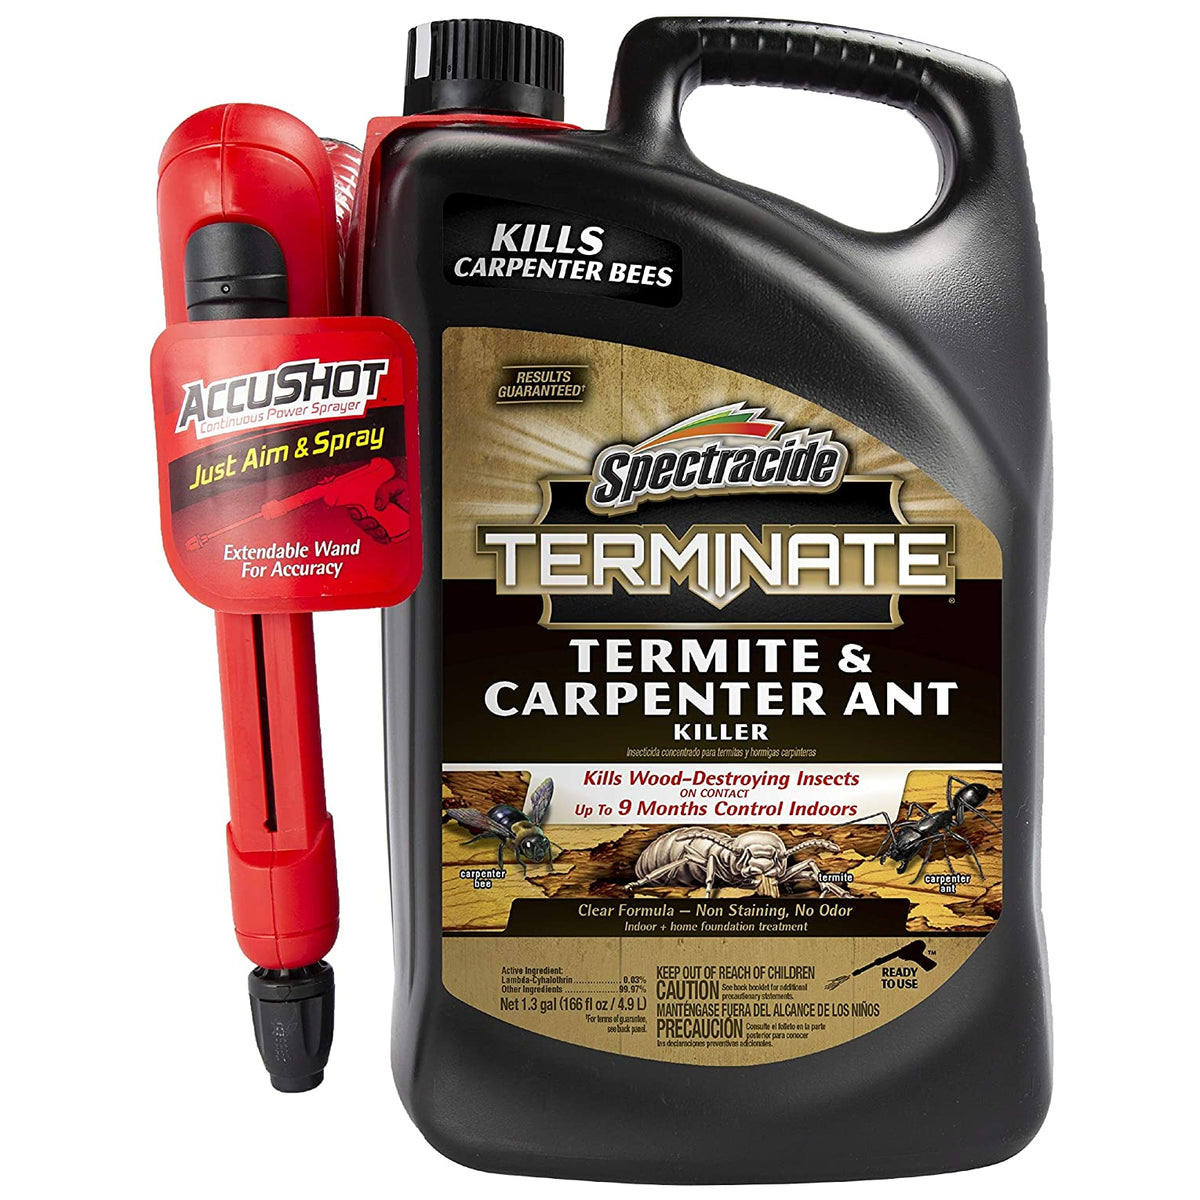 Spectracide HG-96375 Terminate Termite & Carpenter Ant Killer AccuShot Sprayer, 1.33 Gal